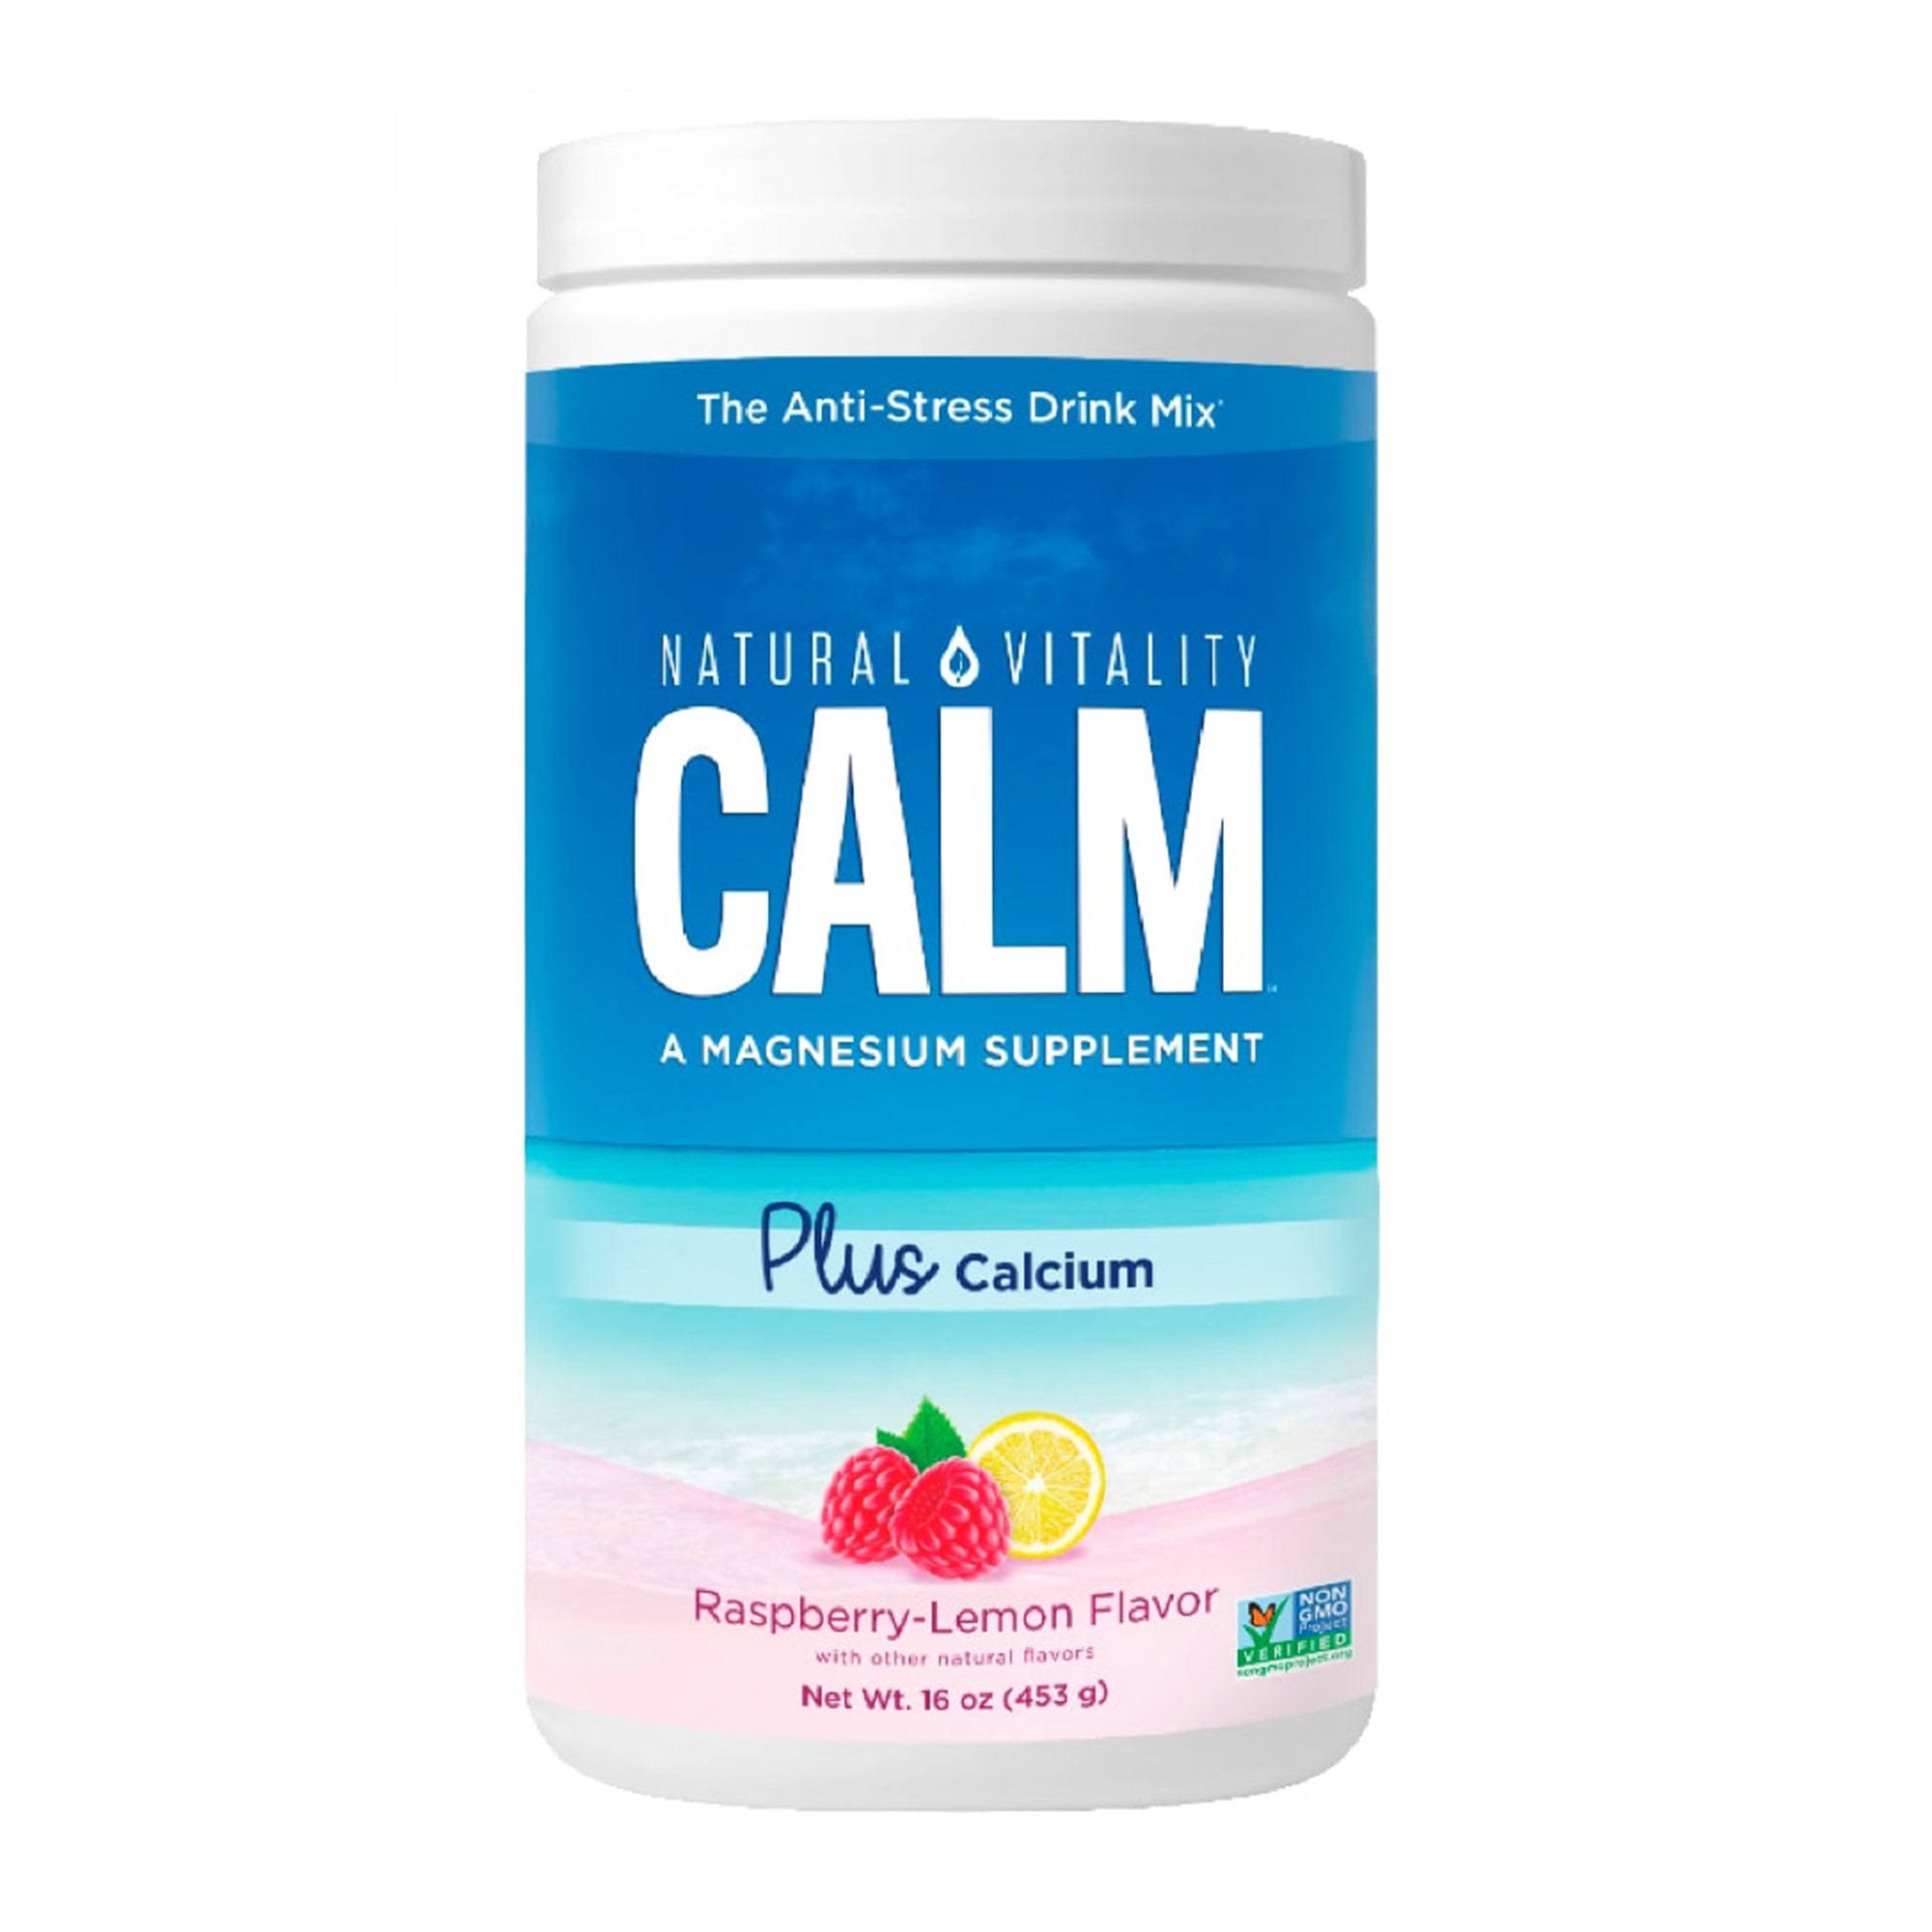 Natural Vitality Natural Calm plus Magnesium Calcium Drink Supplement - Raspberry Lemon, 16oz